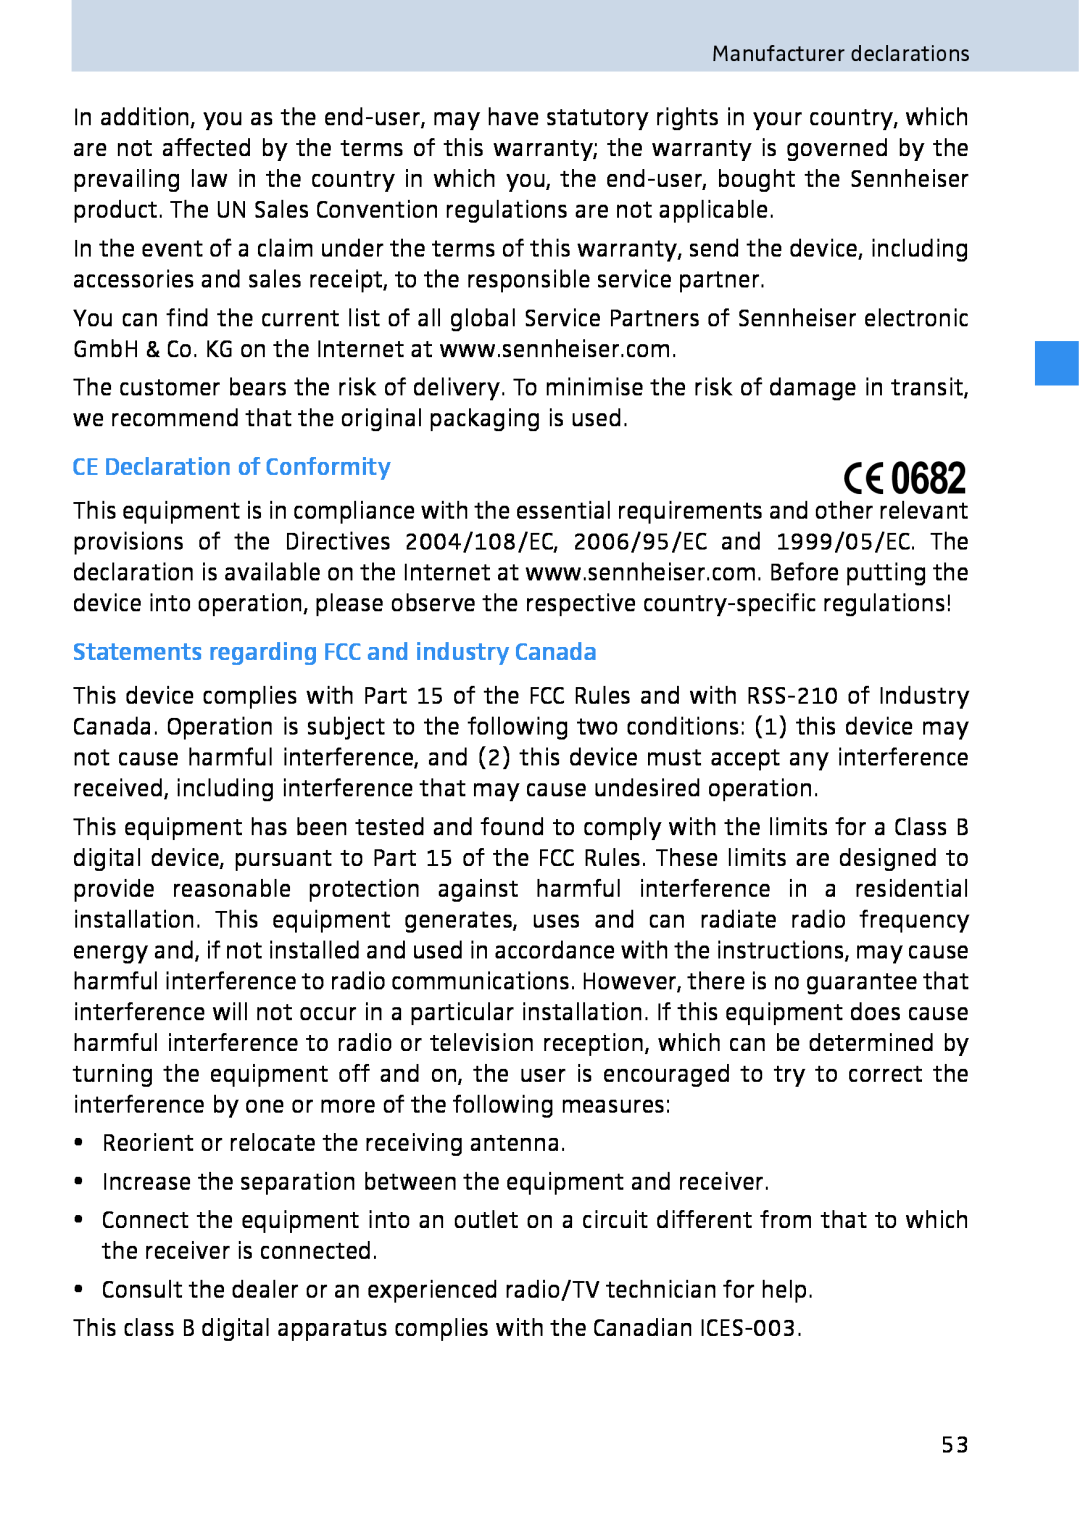 Sennheiser 2020 manual CE Declaration of Conformity, Statements regarding FCC and industry Canada, 0682 